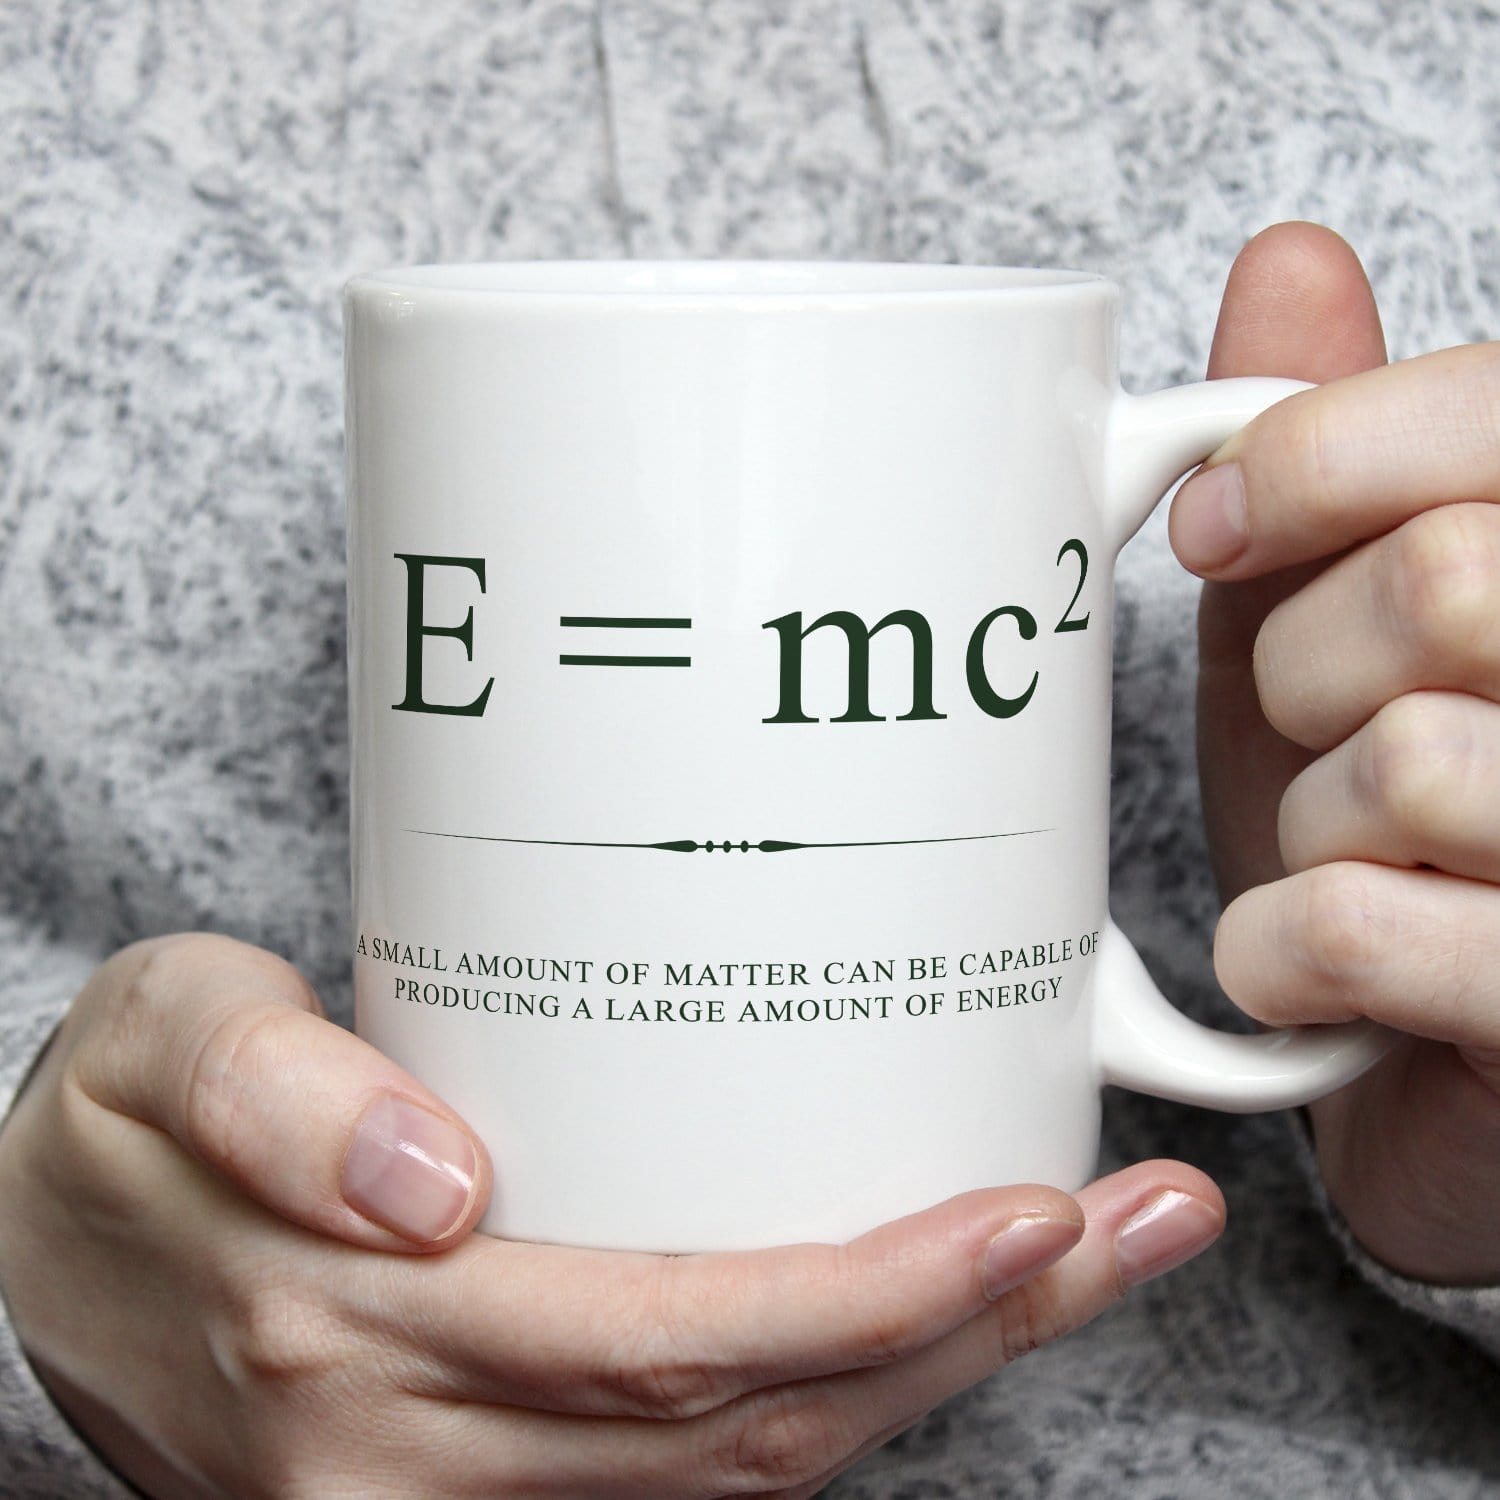 Theory of Relativity White Mug